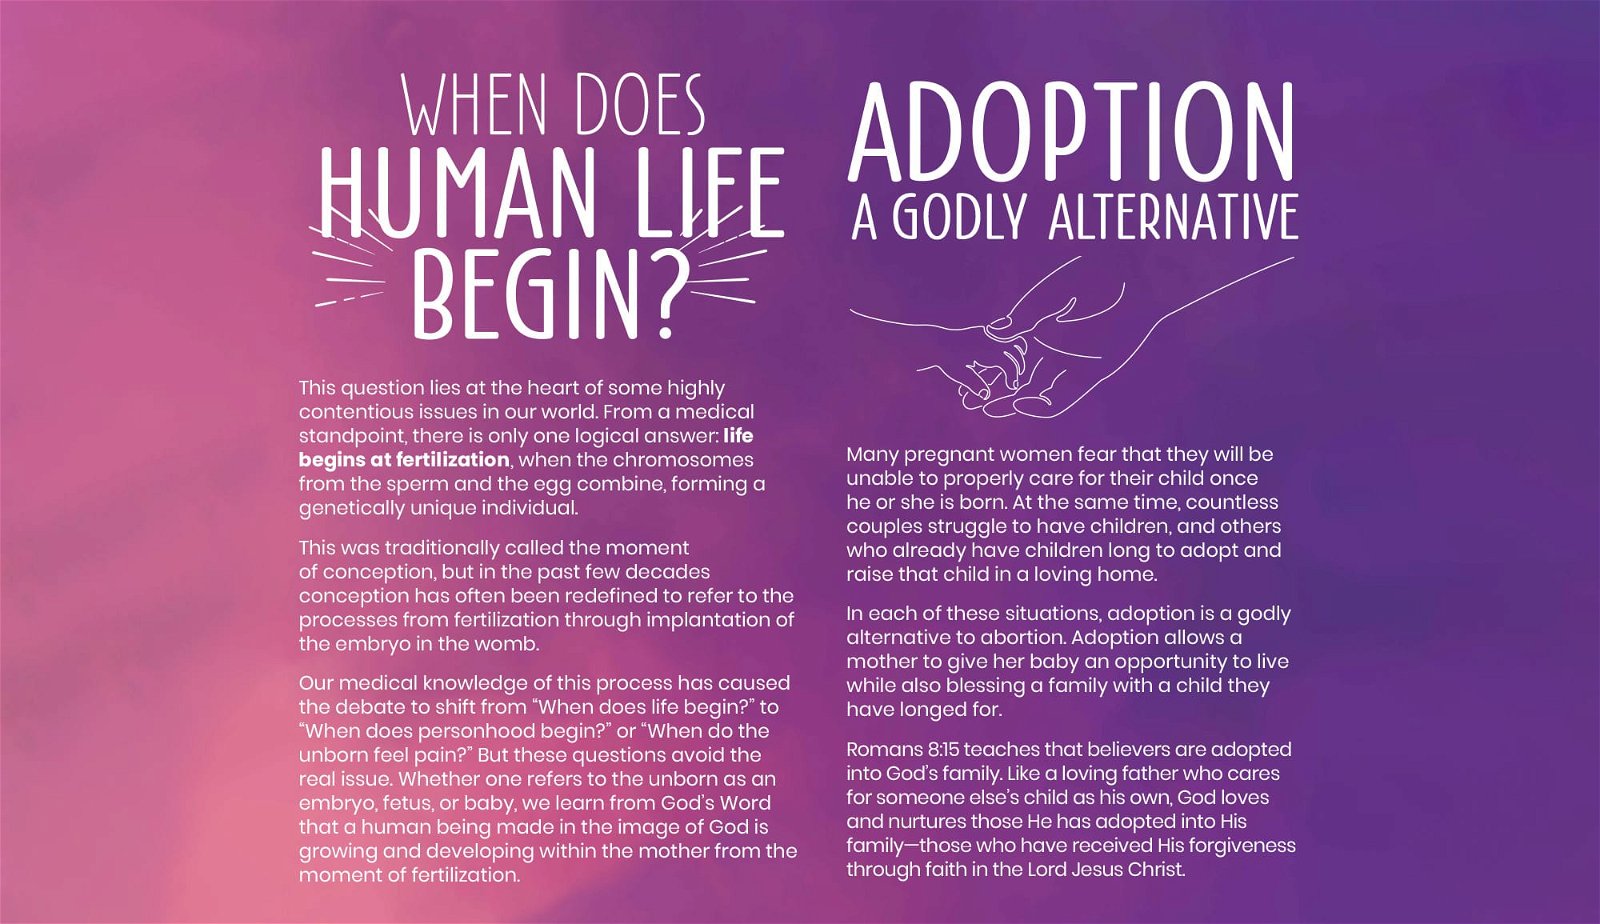 Human Life/Adoption